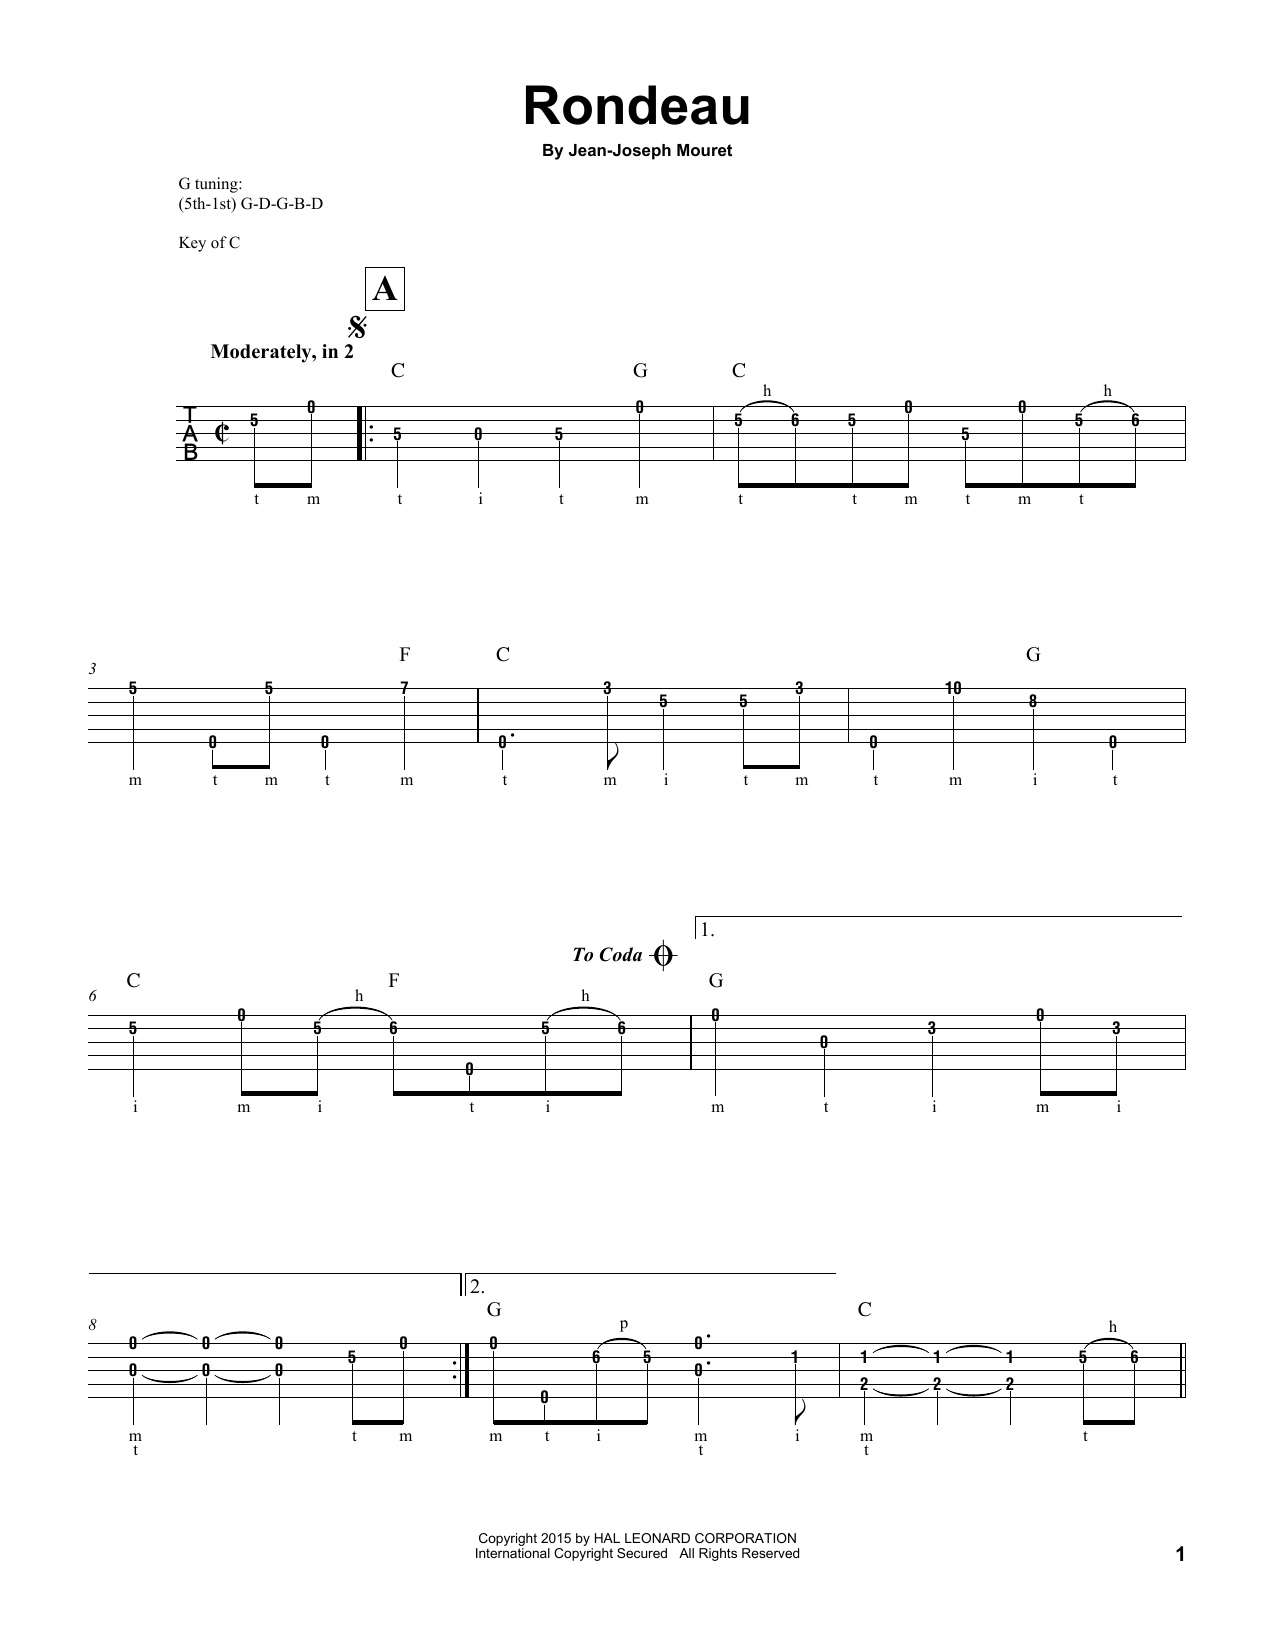 Jean-Joseph Mouret Fanfare Rondeau Sheet Music Notes & Chords for Tenor Saxophone - Download or Print PDF